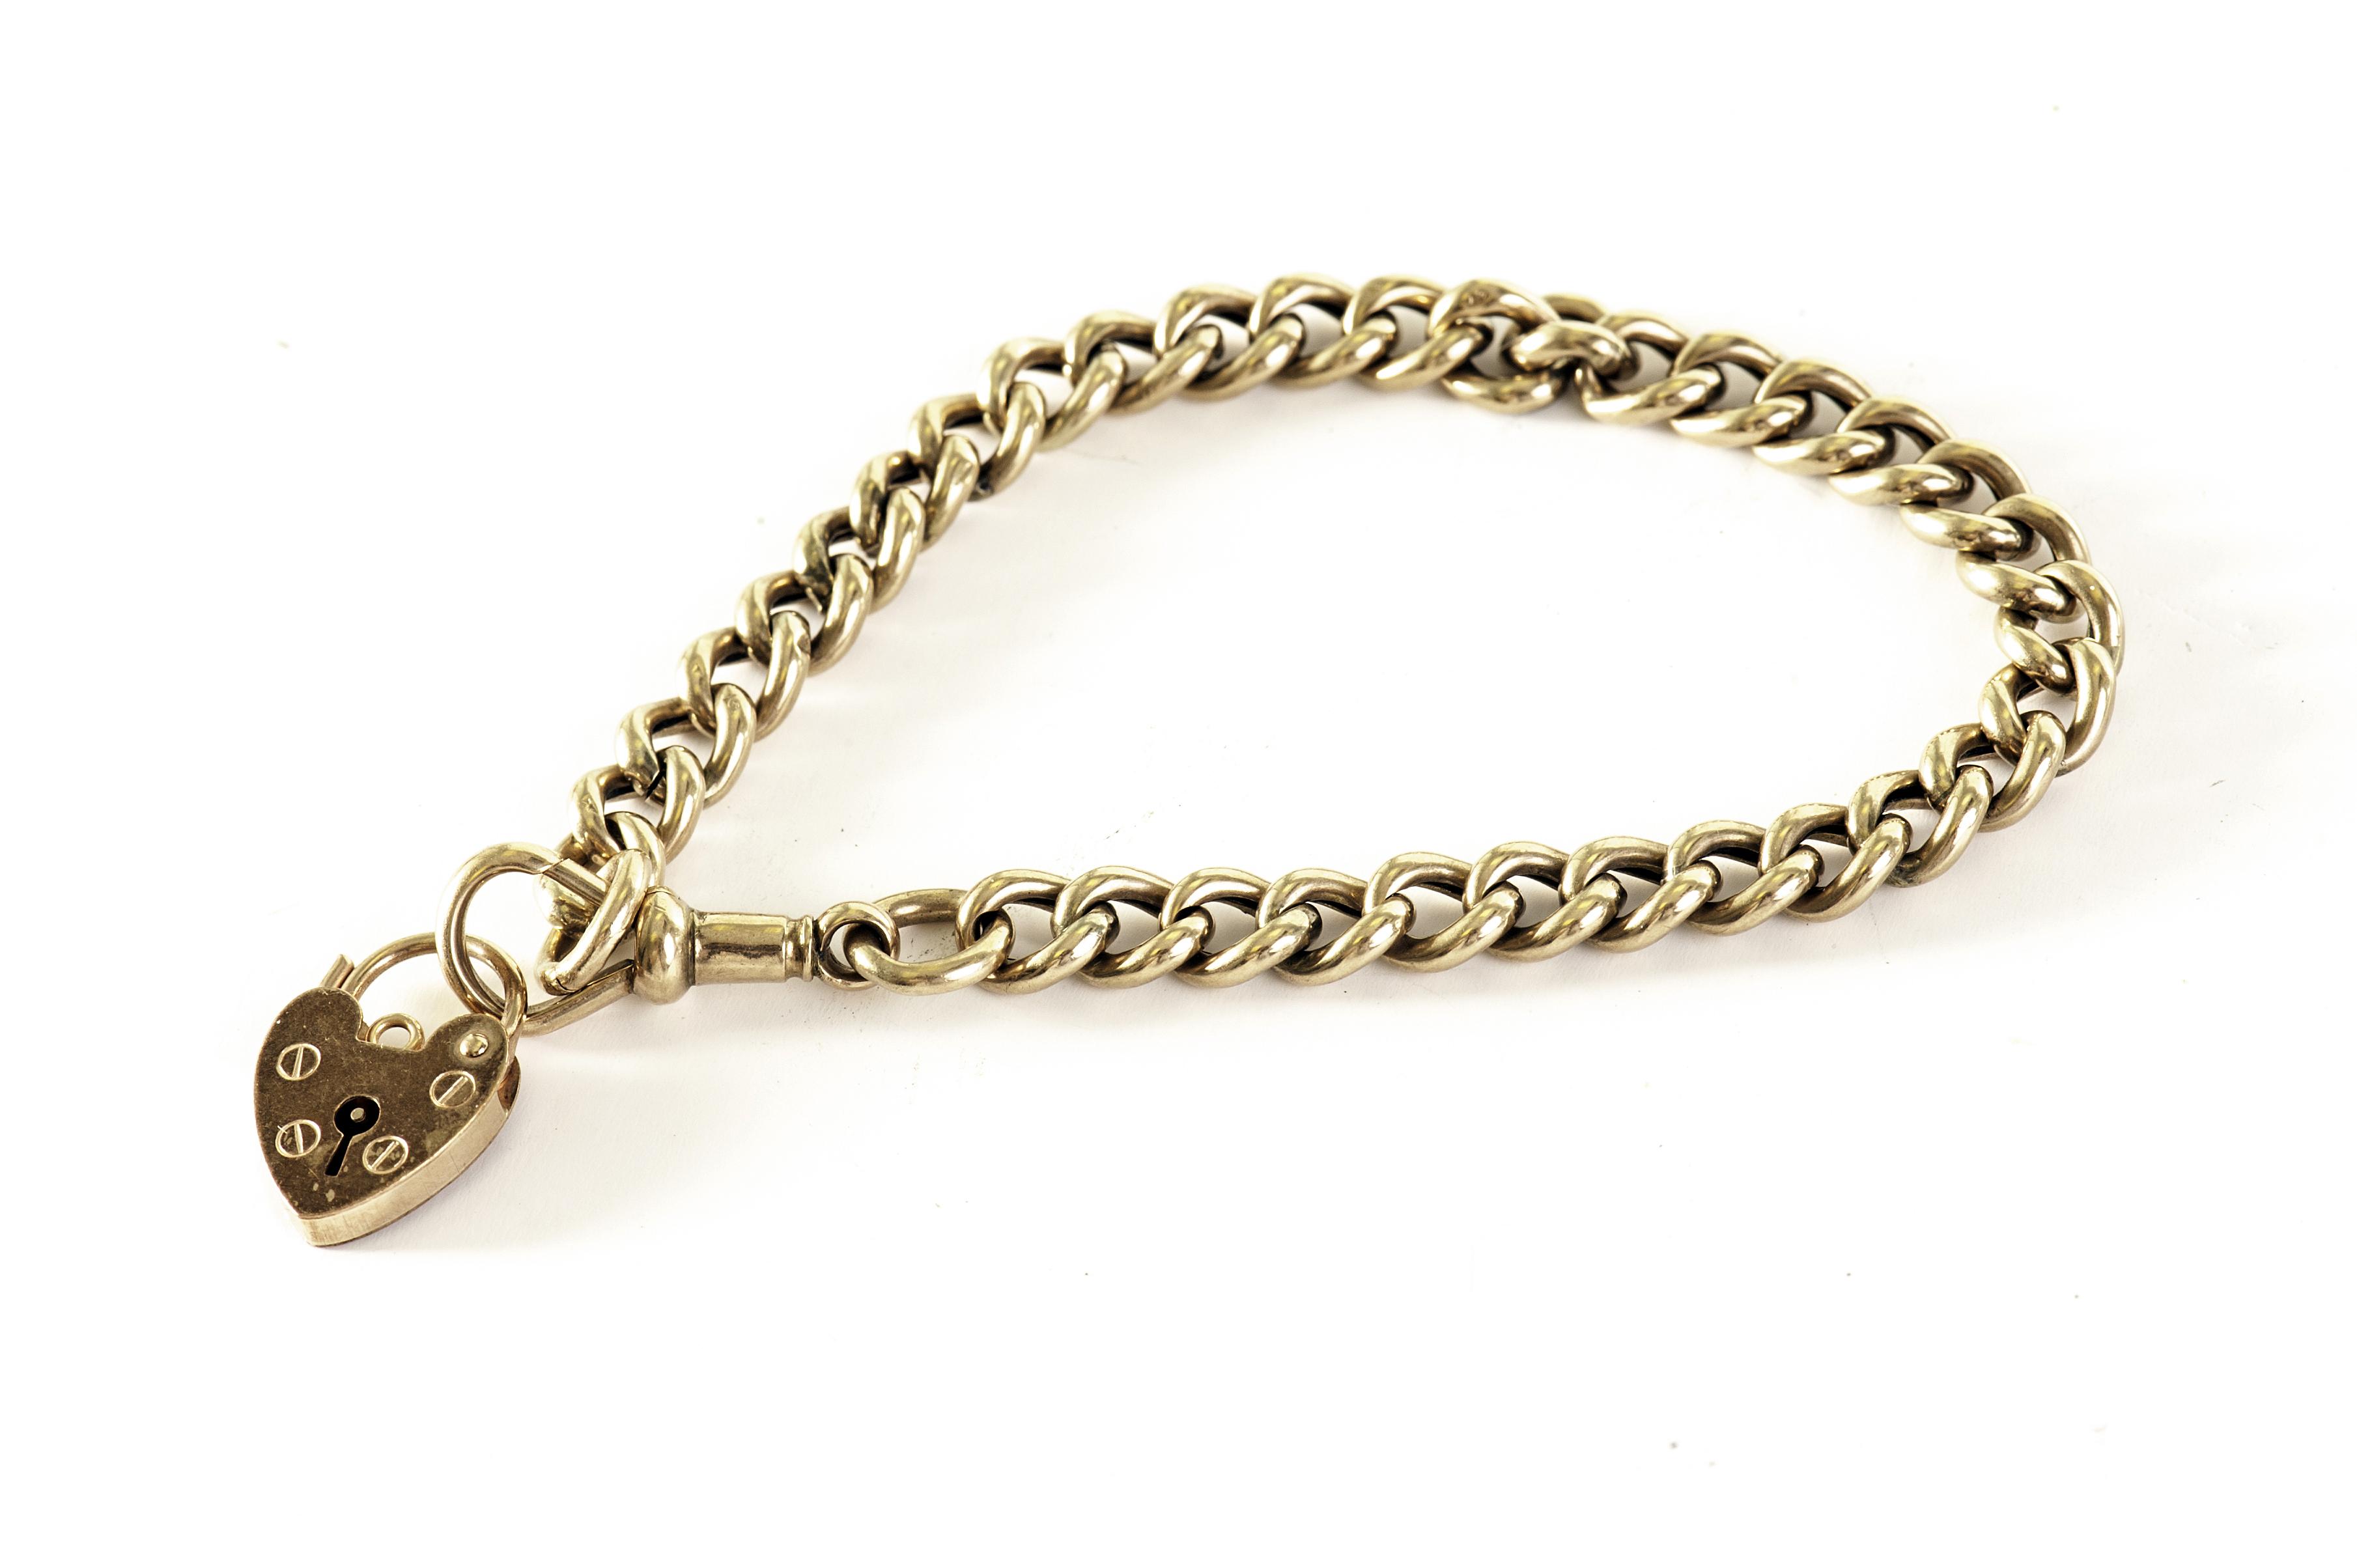 A 9ct gold bracelet, having love heart padlock clasp, approx 12g